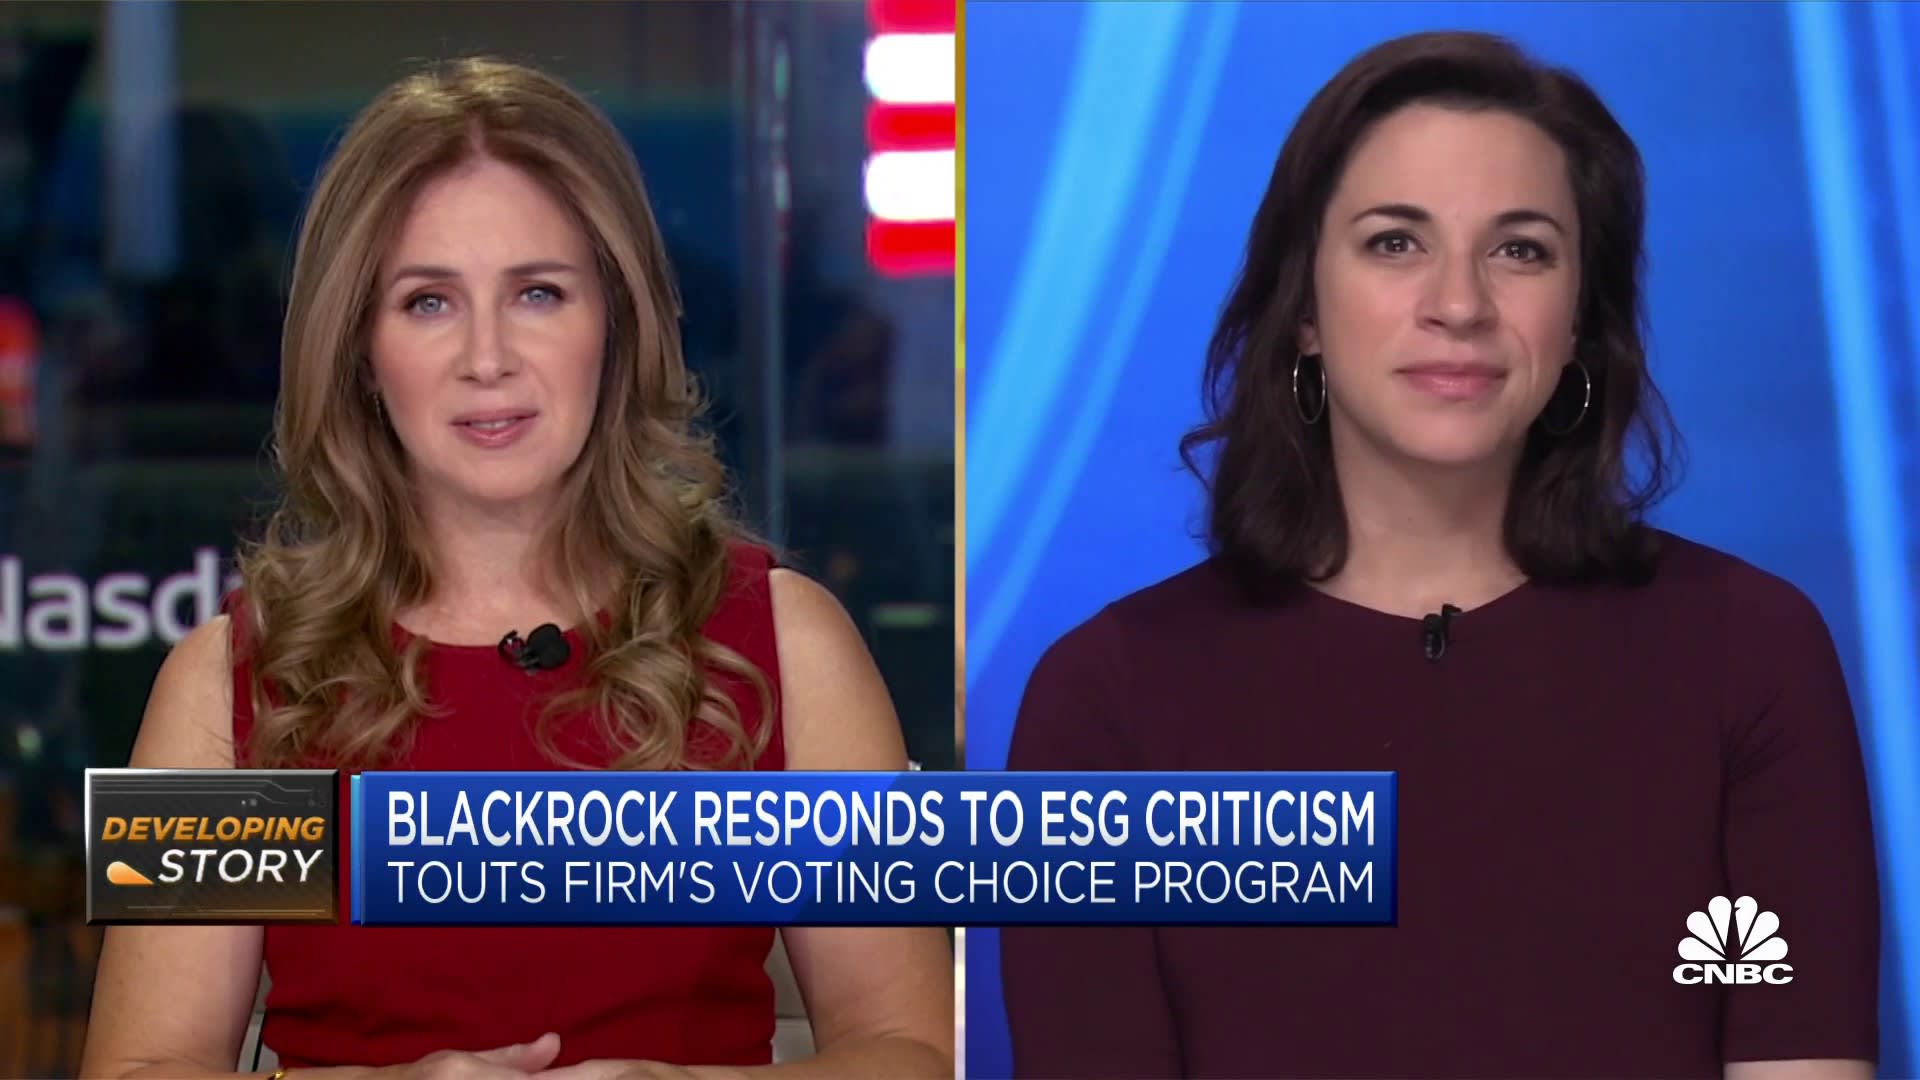 BlackRock touts firm's voting choice program in response to ESG critics